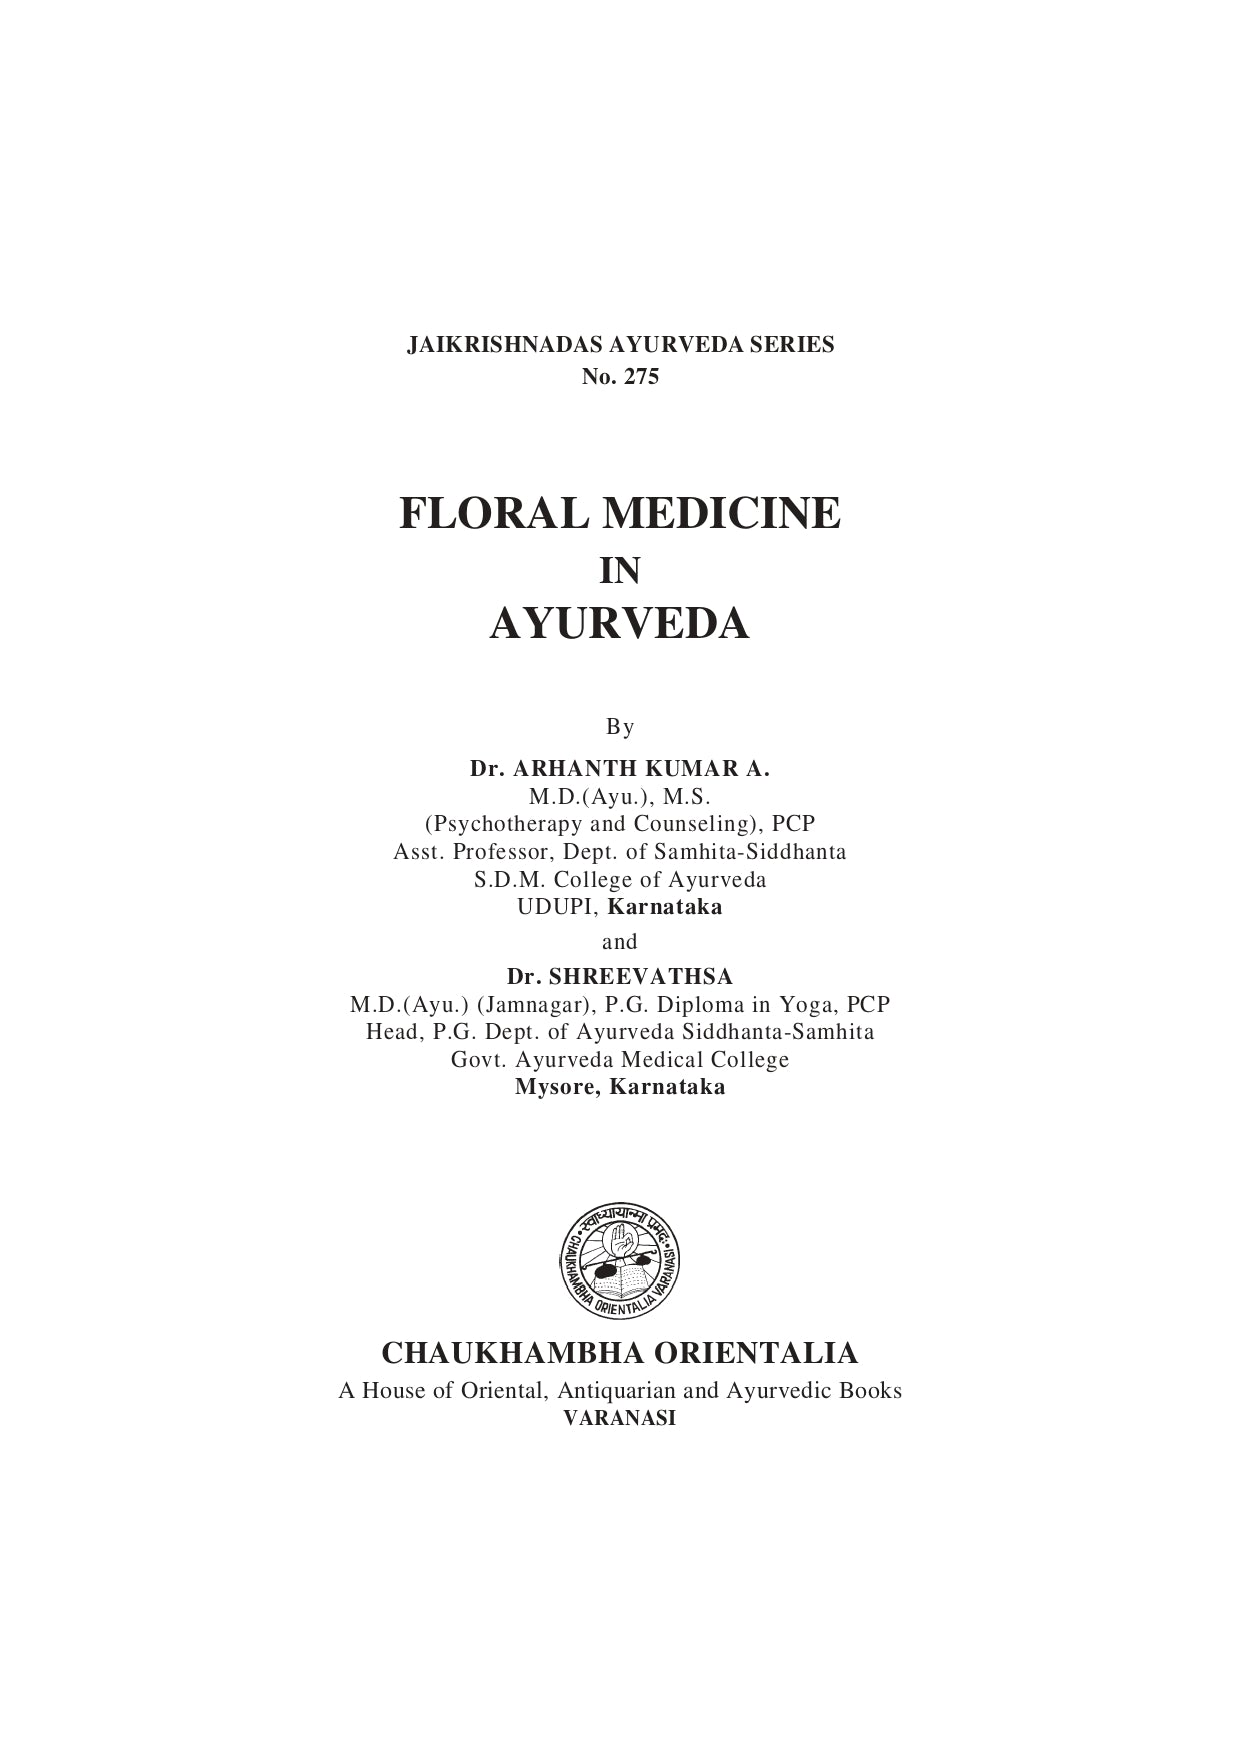 Chaukhambha Orientalia Floral Medicine In Ayurveda